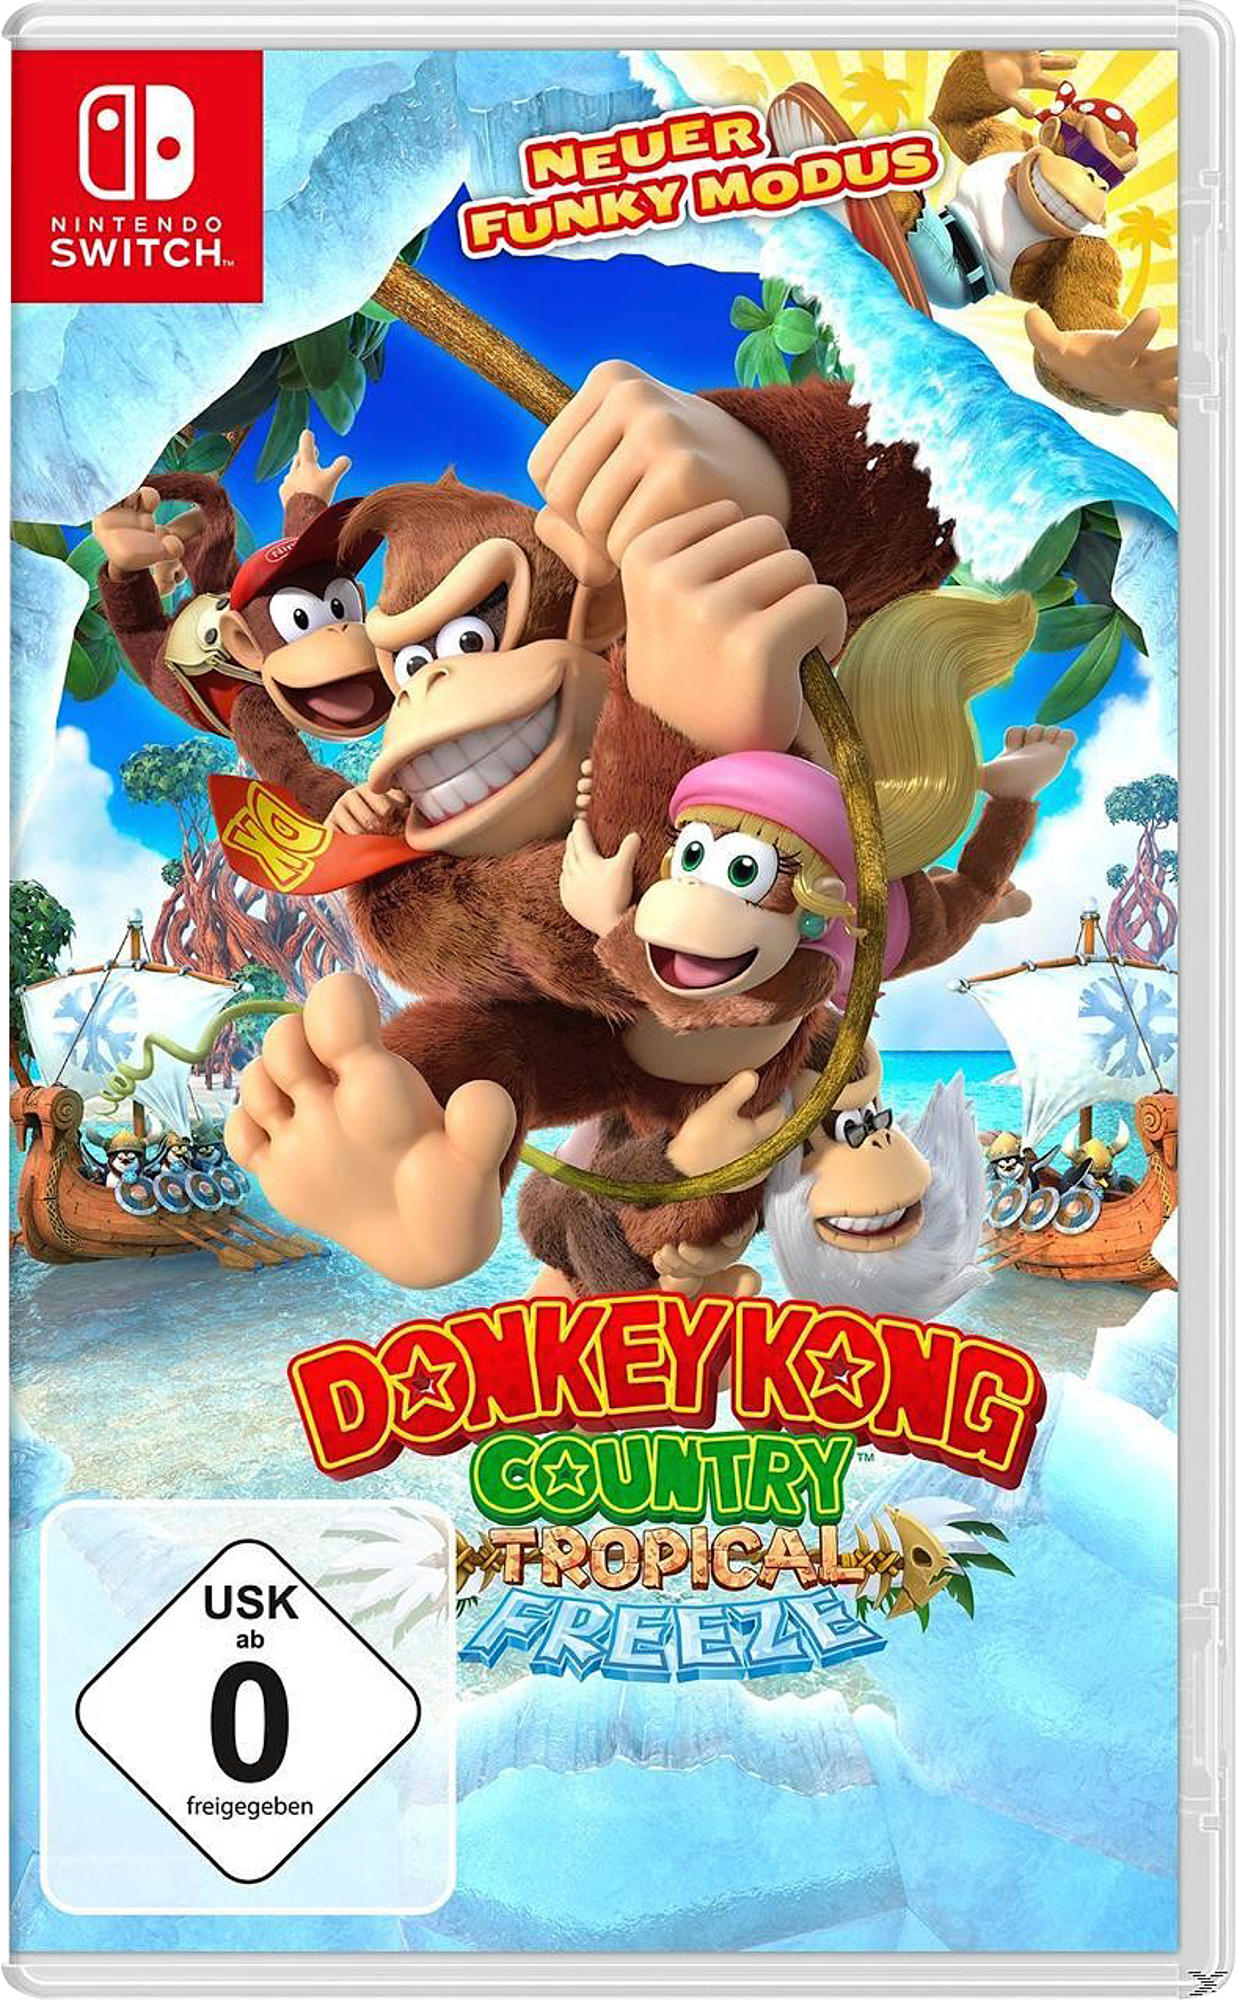 Switch] [Nintendo - Freeze Kong Tropical Country: Donkey